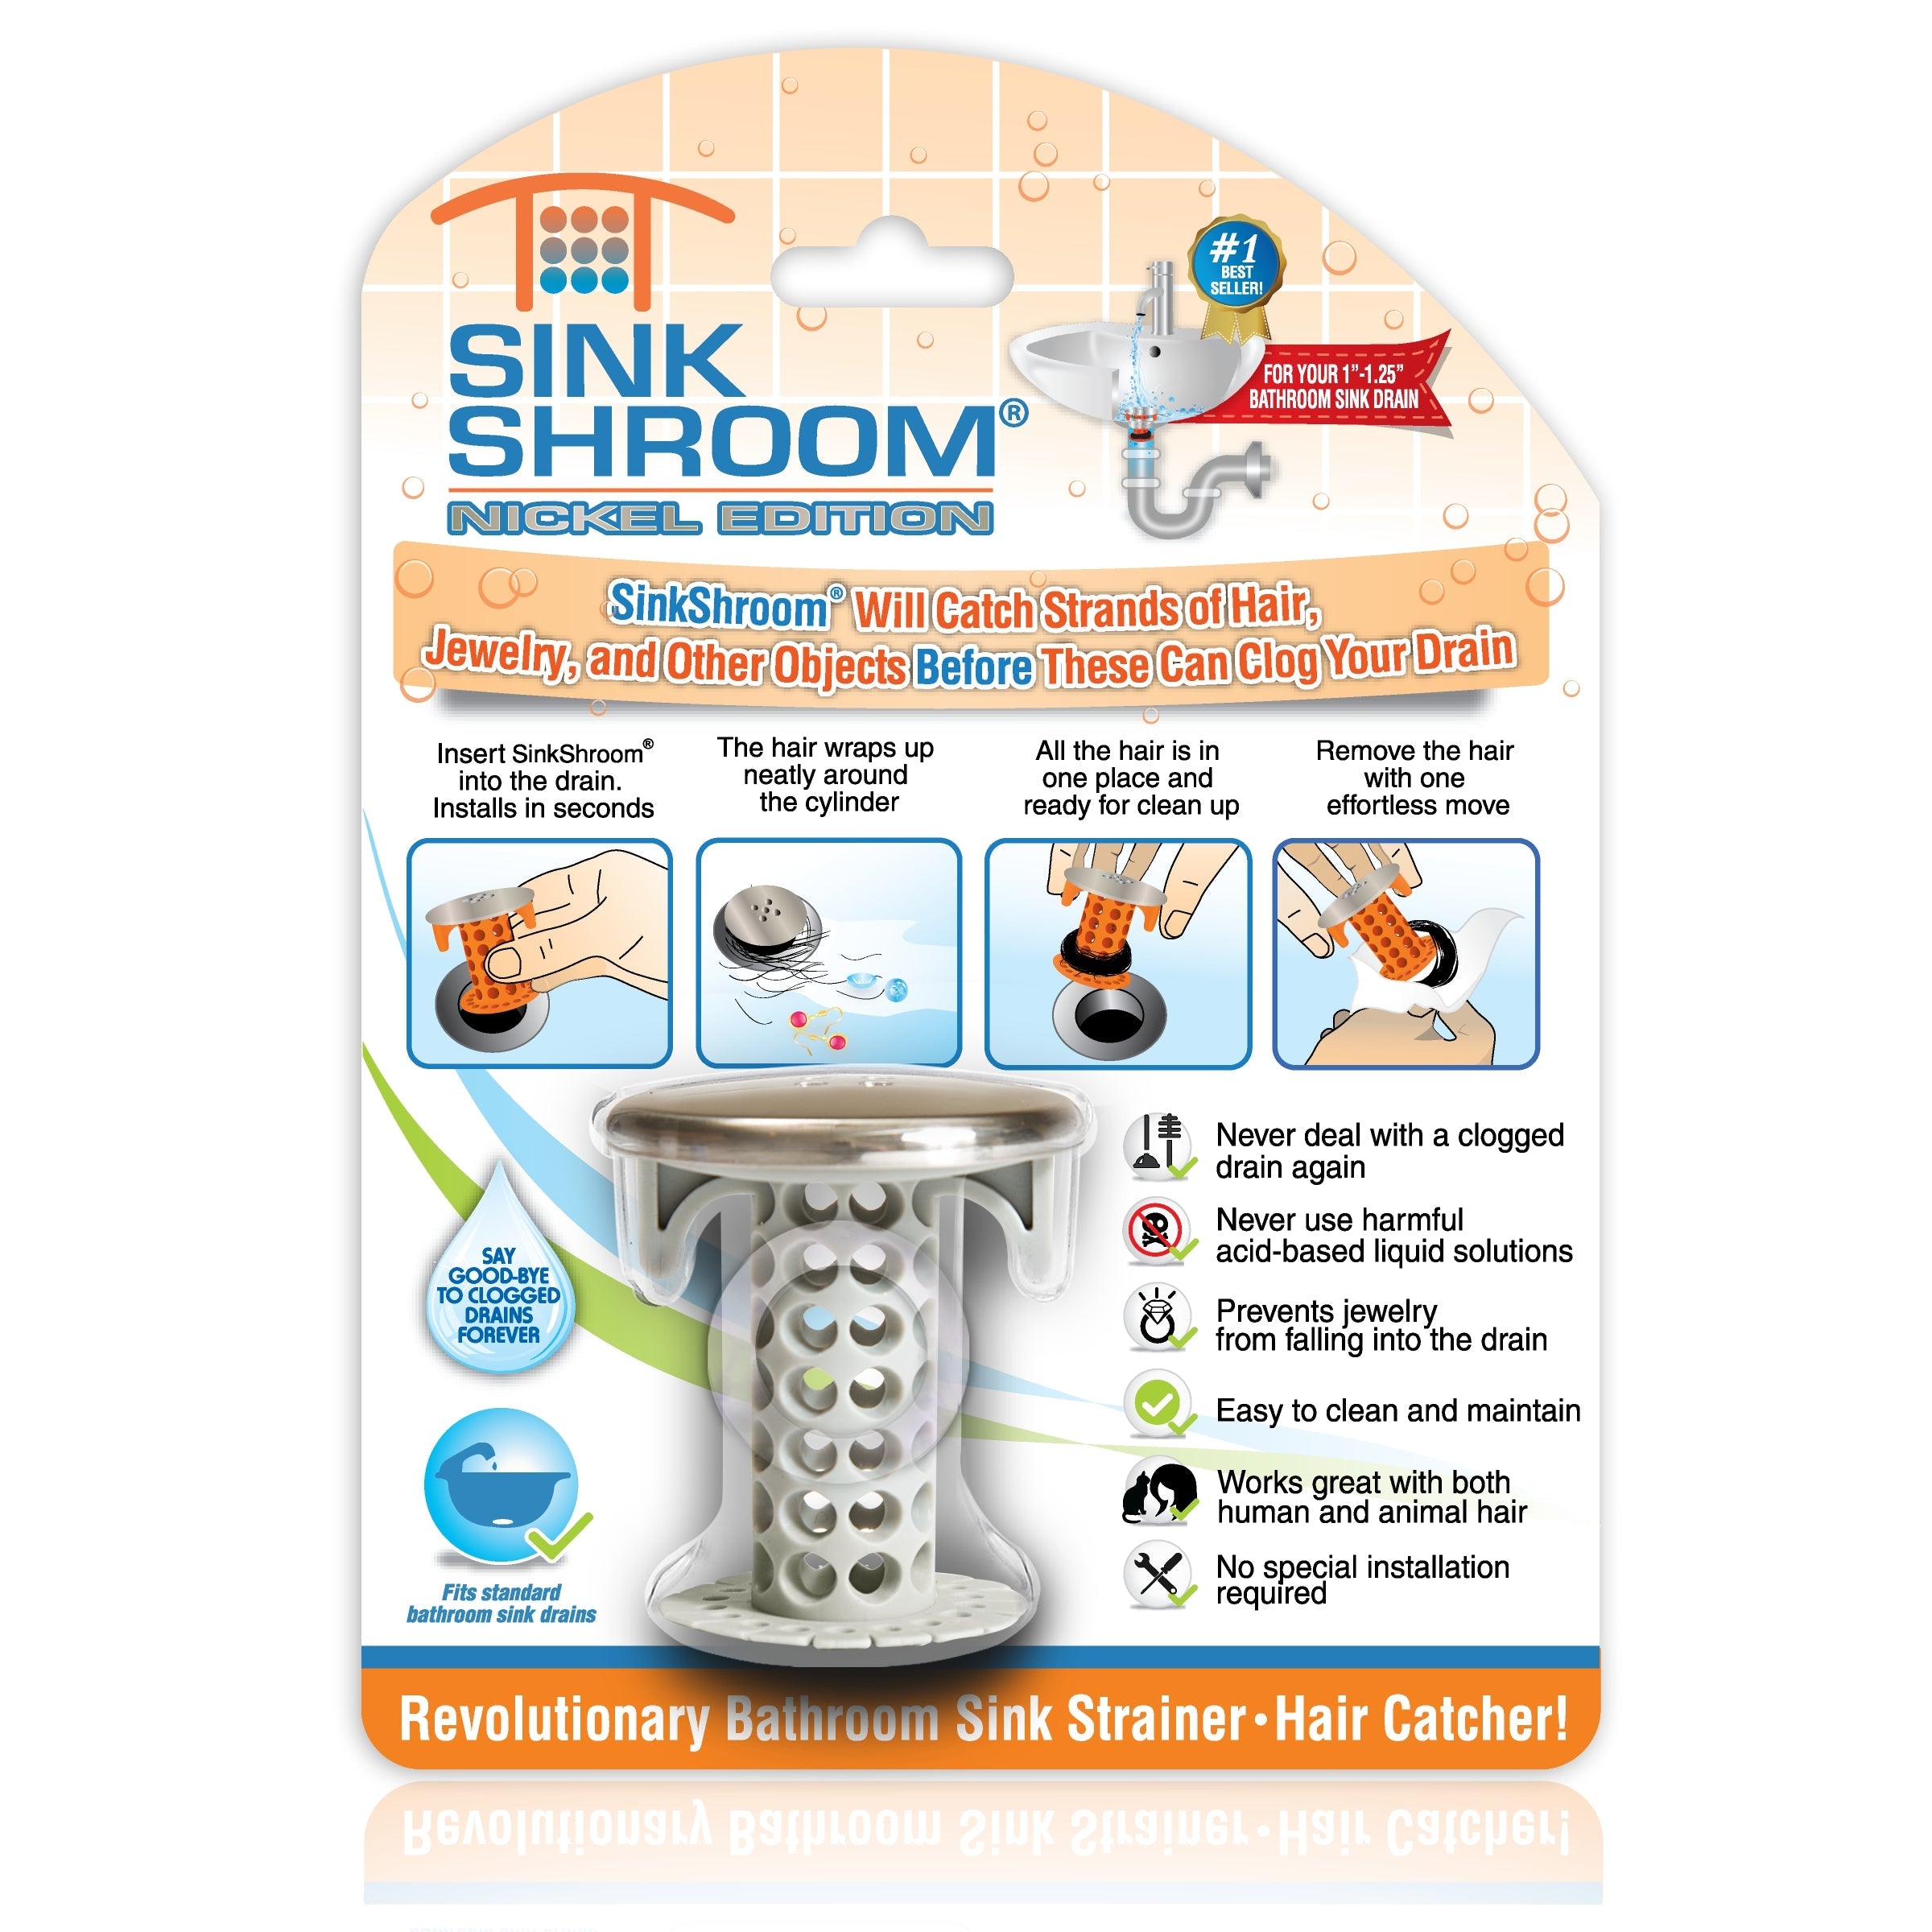 REPLACEMENT MINI MUSHROOM 2-PACK FOR SHOWERSHROOM ULTRA